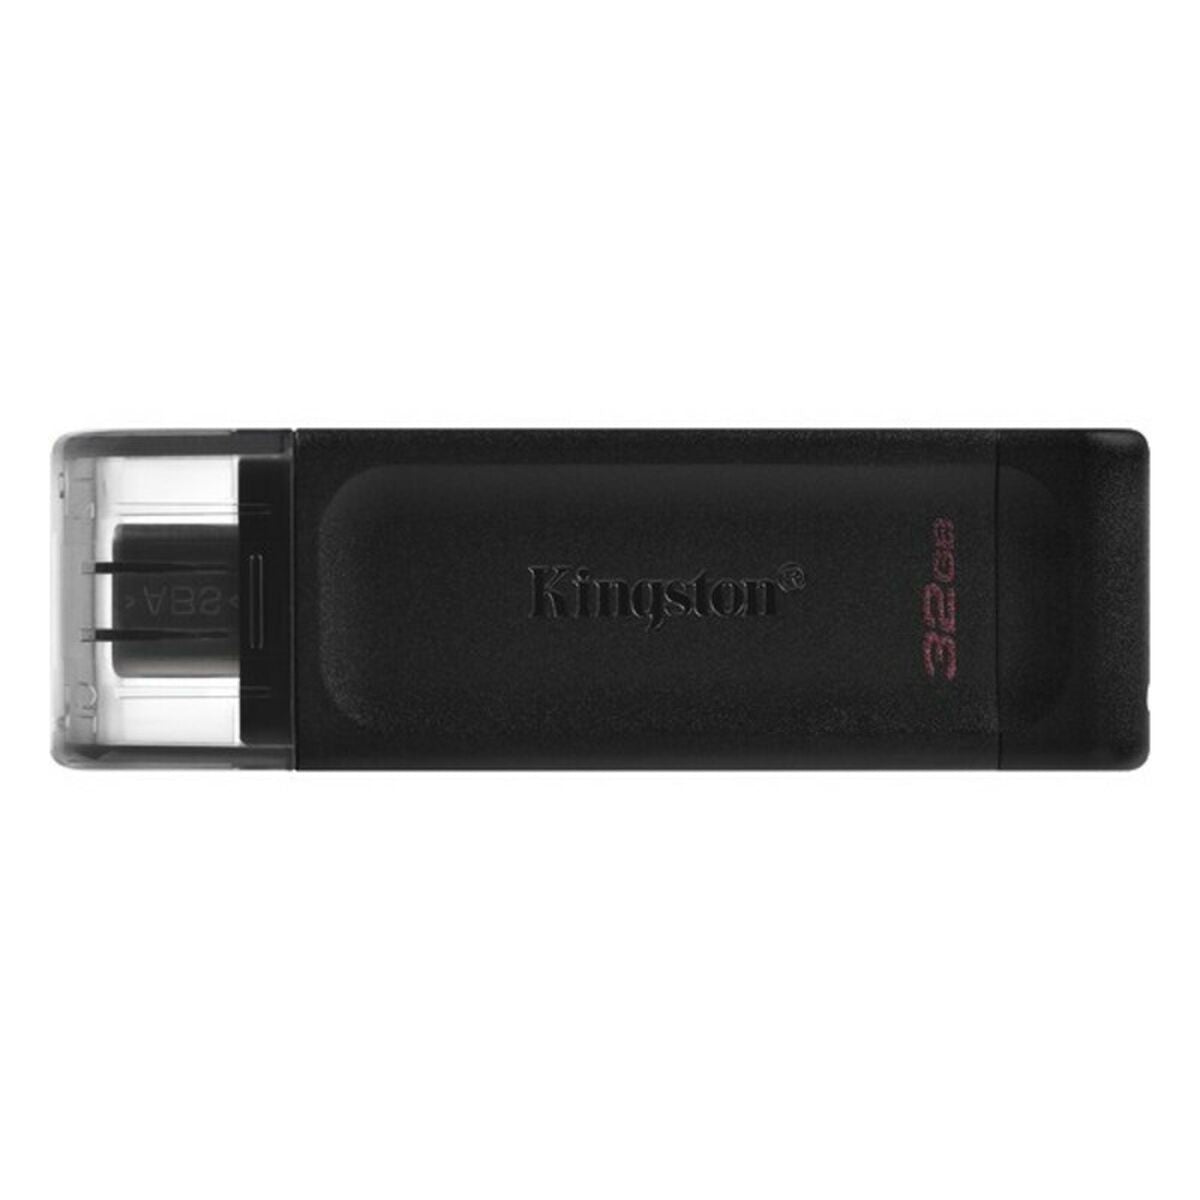 Memoria USB Kingston usb c